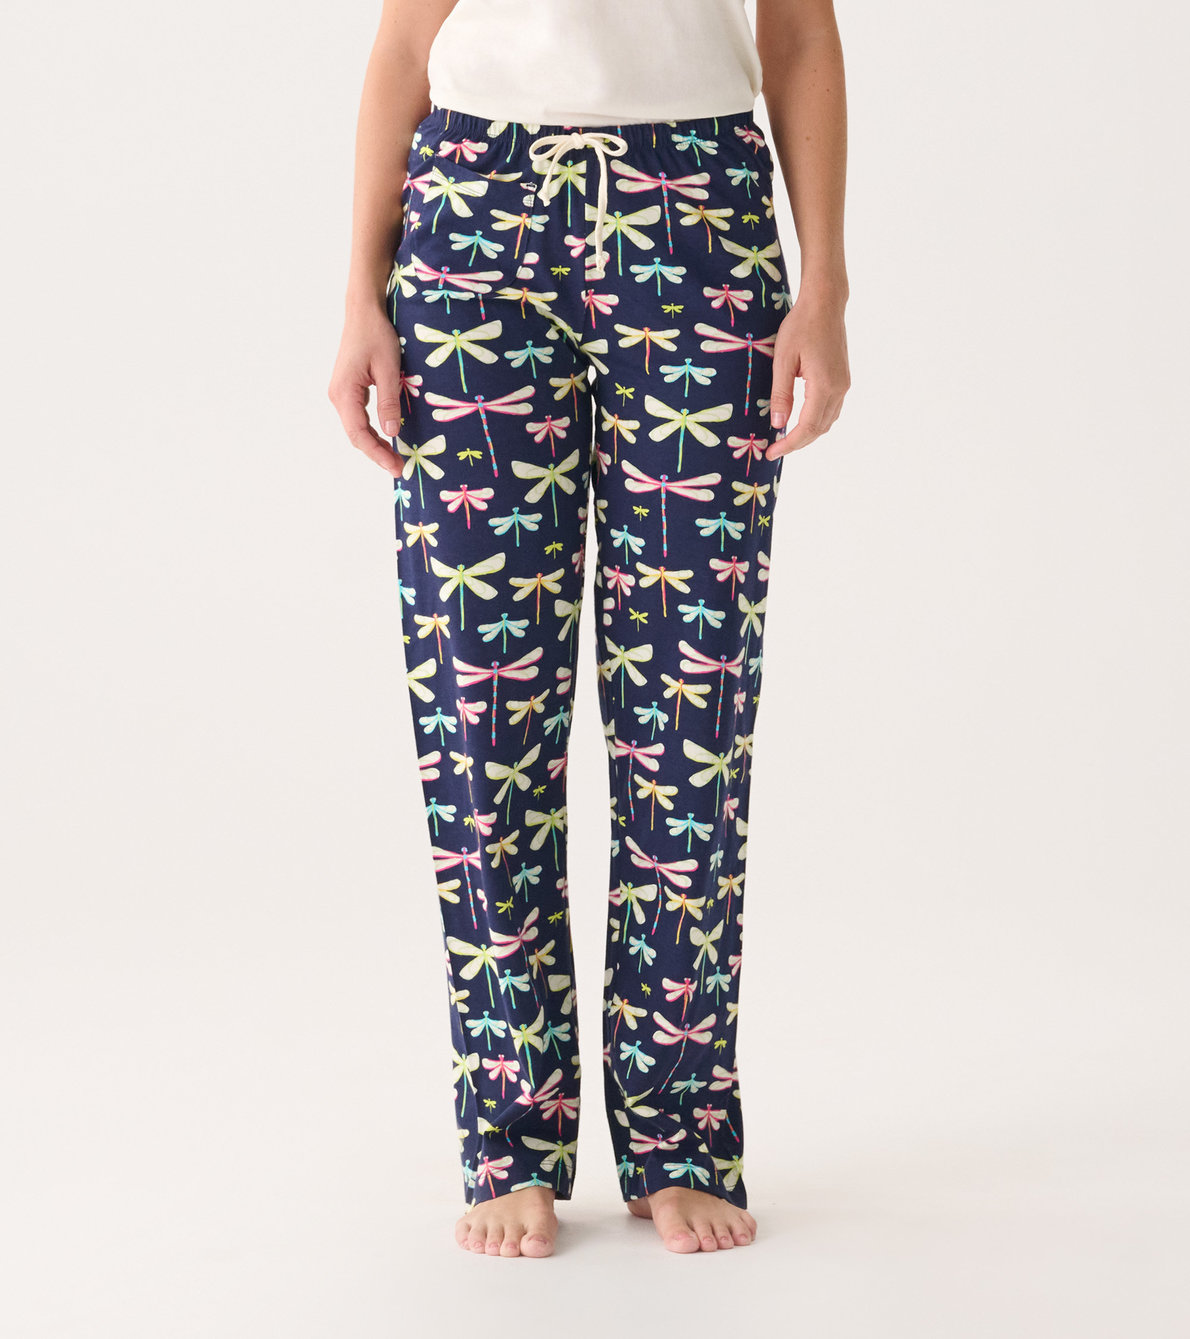 View larger image of Dragonflies Women's Jersey Pajama Pants